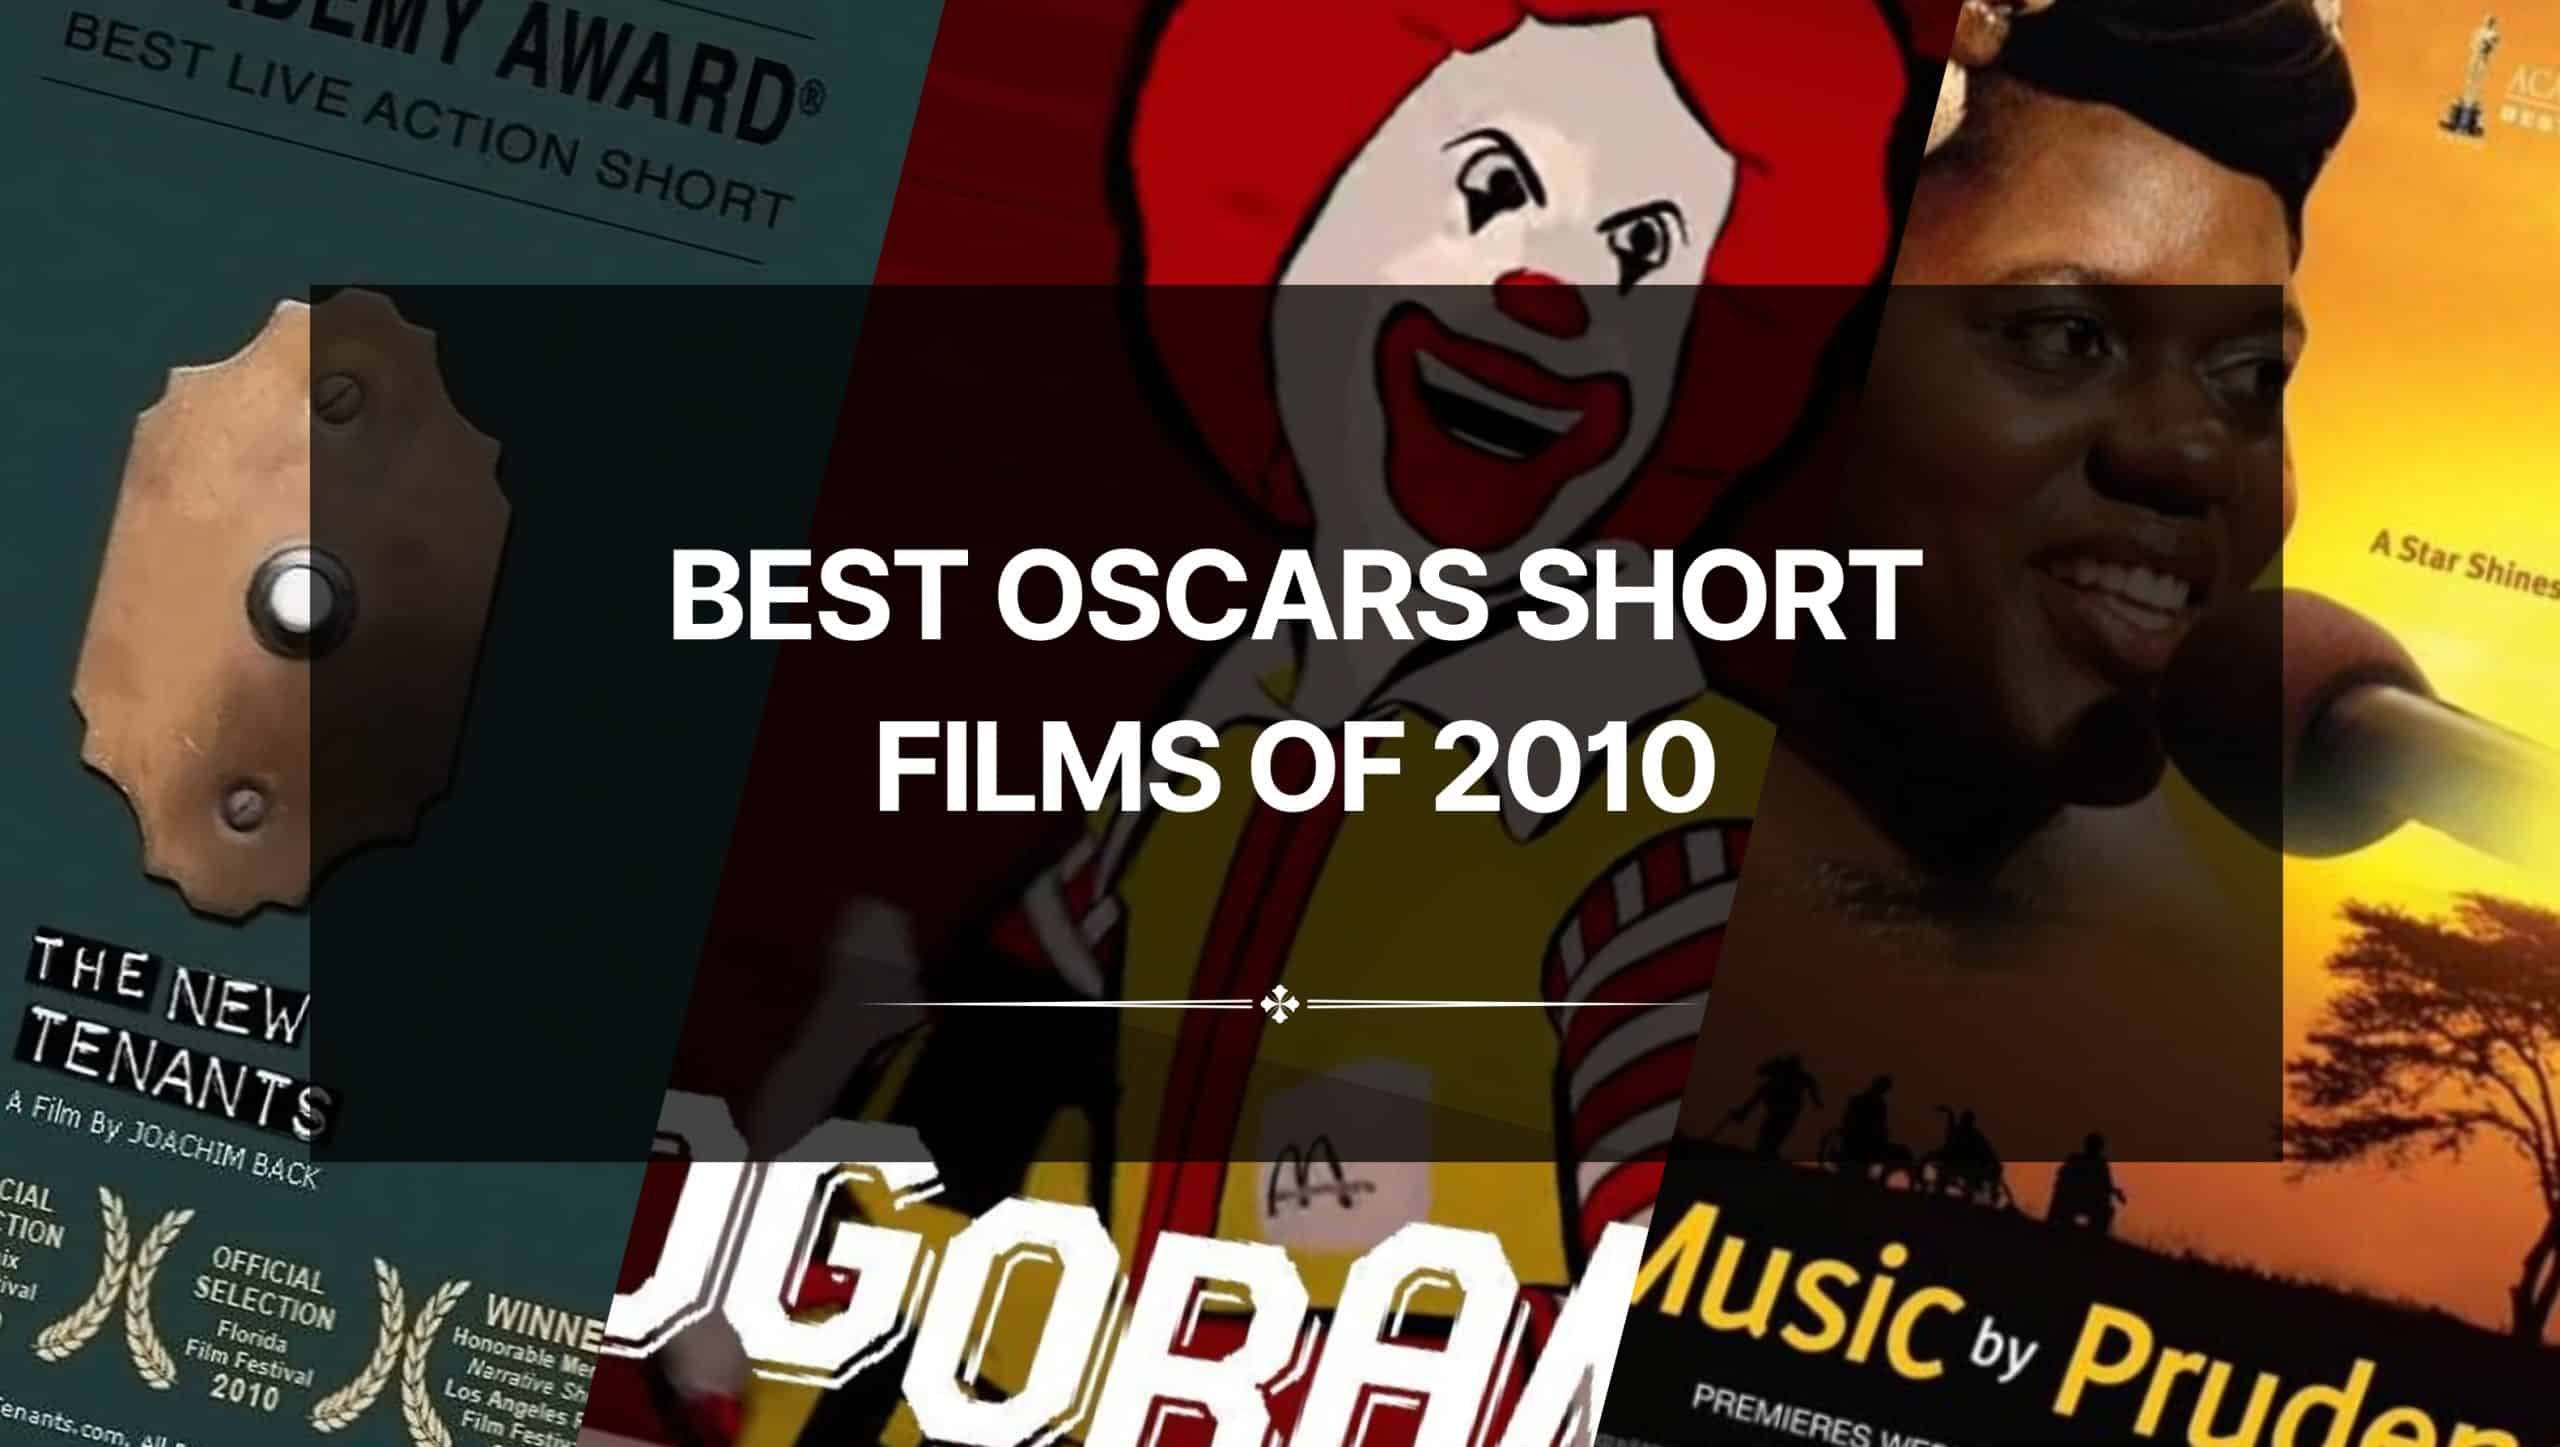 Best Oscars Short Films of 2010